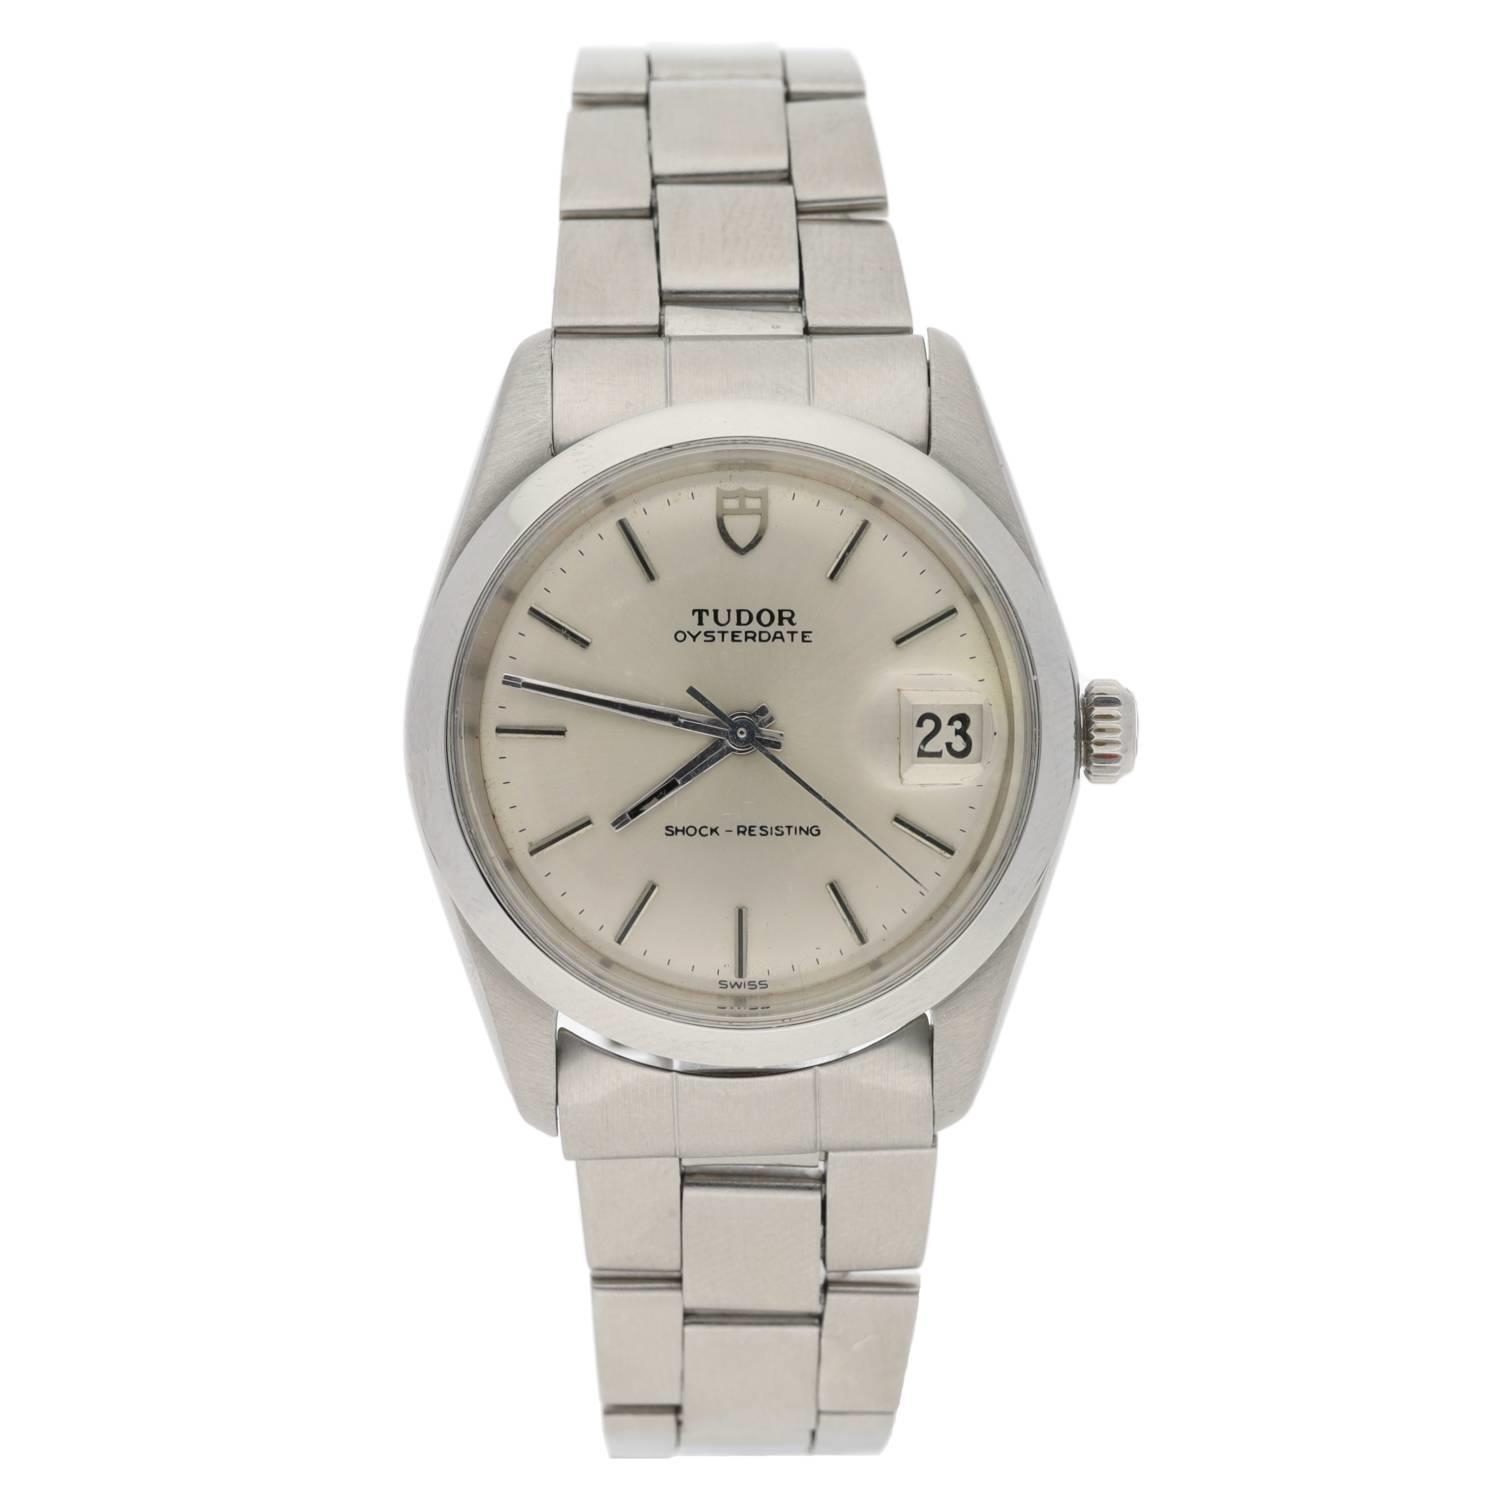 Tudor Oysterdate stainless steel gentleman's wristwatch, reference no. 7992/0, serial no. 662xxx,